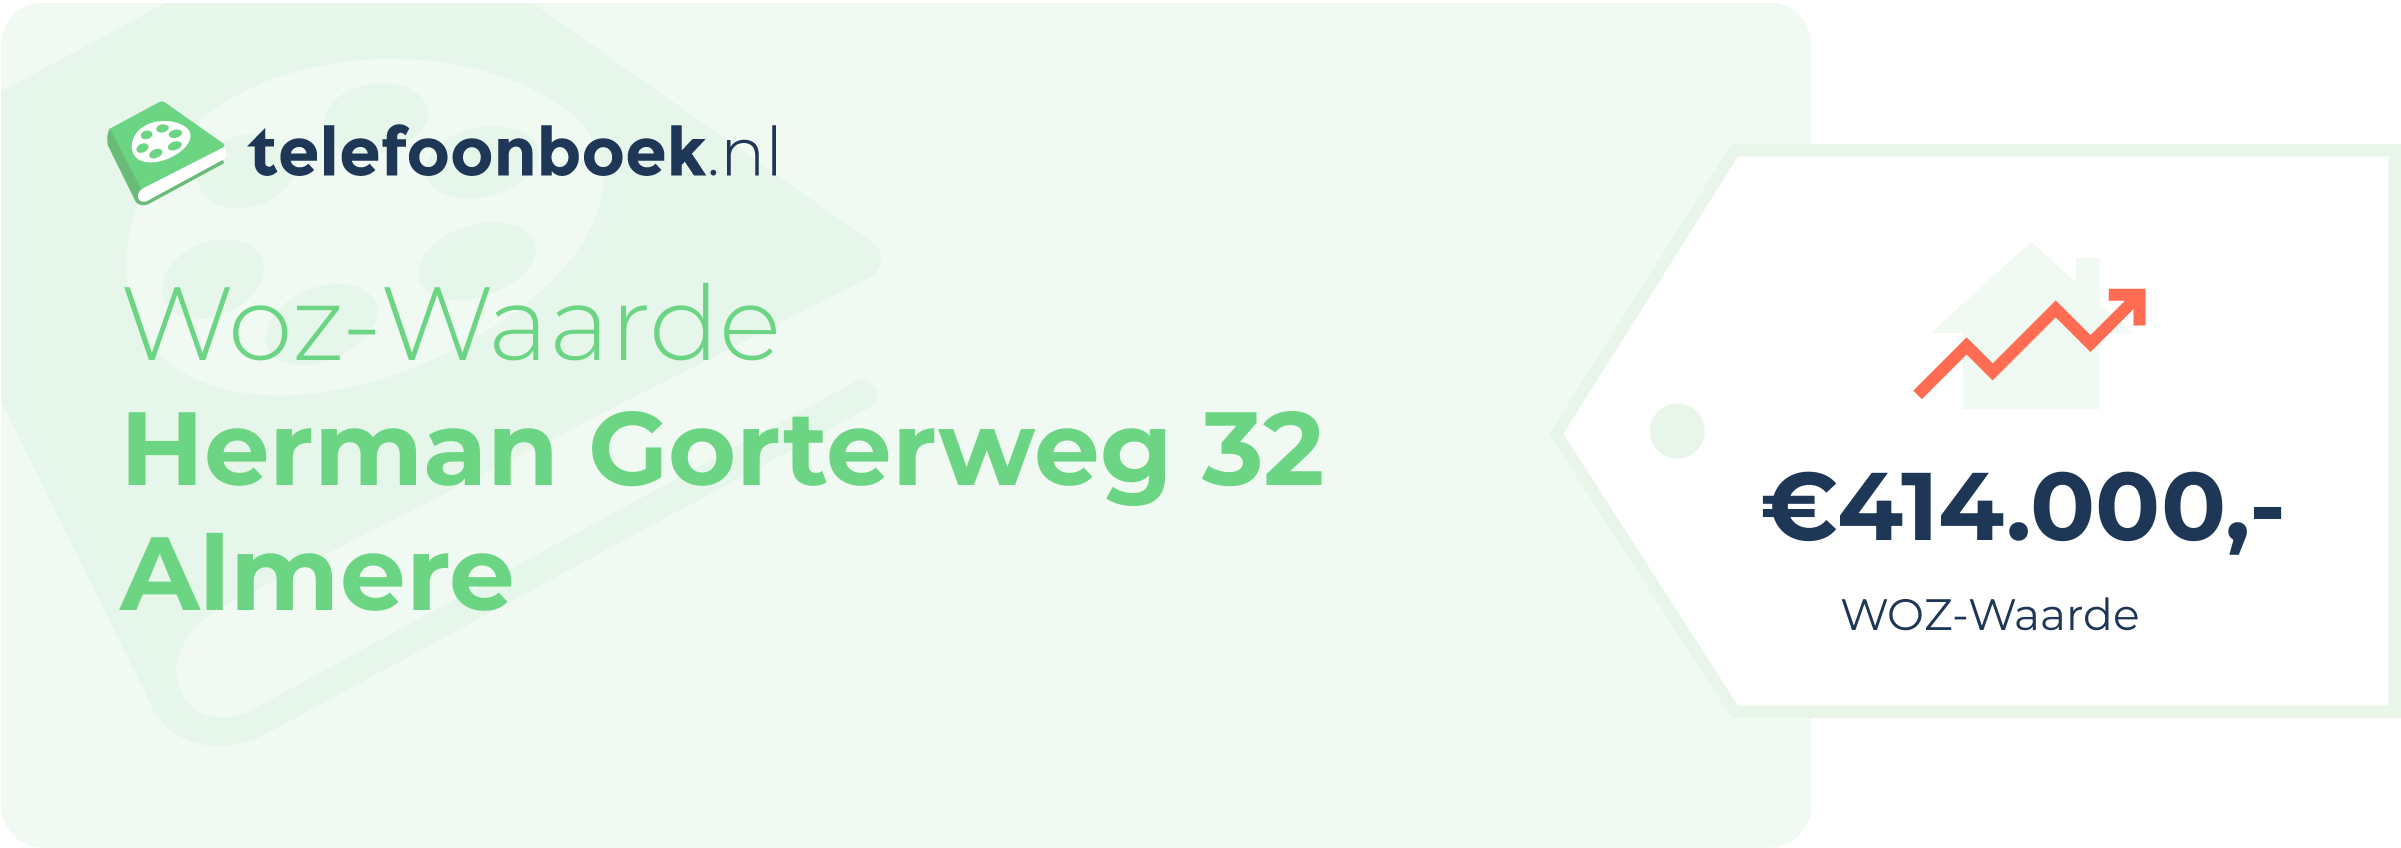 WOZ-waarde Herman Gorterweg 32 Almere